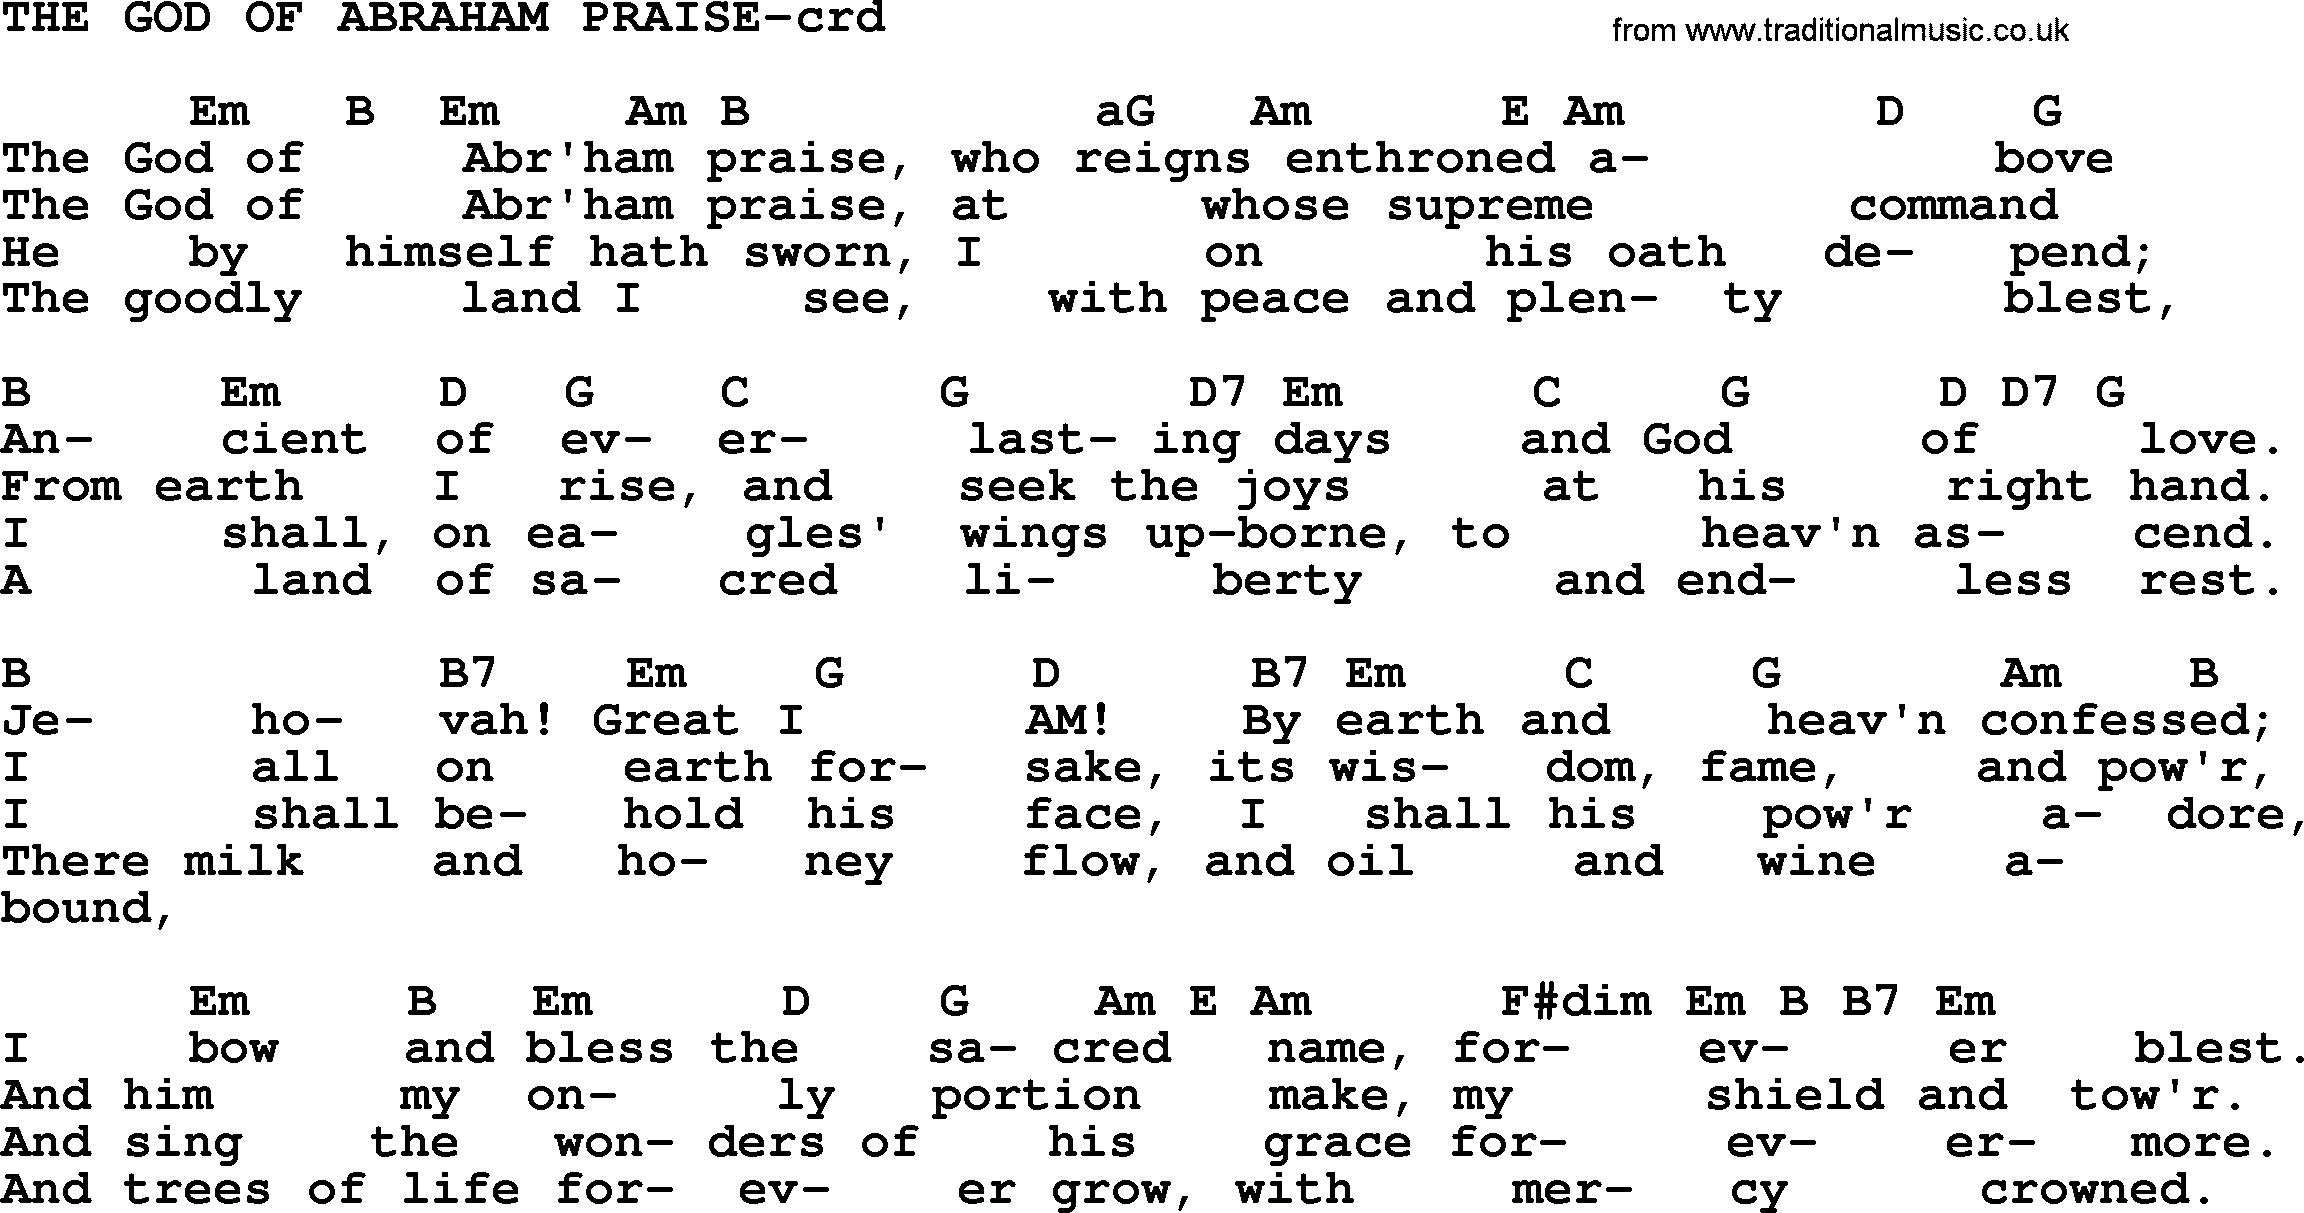 Top 500 Hymn: The God Of Abraham Praise, lyrics and chords